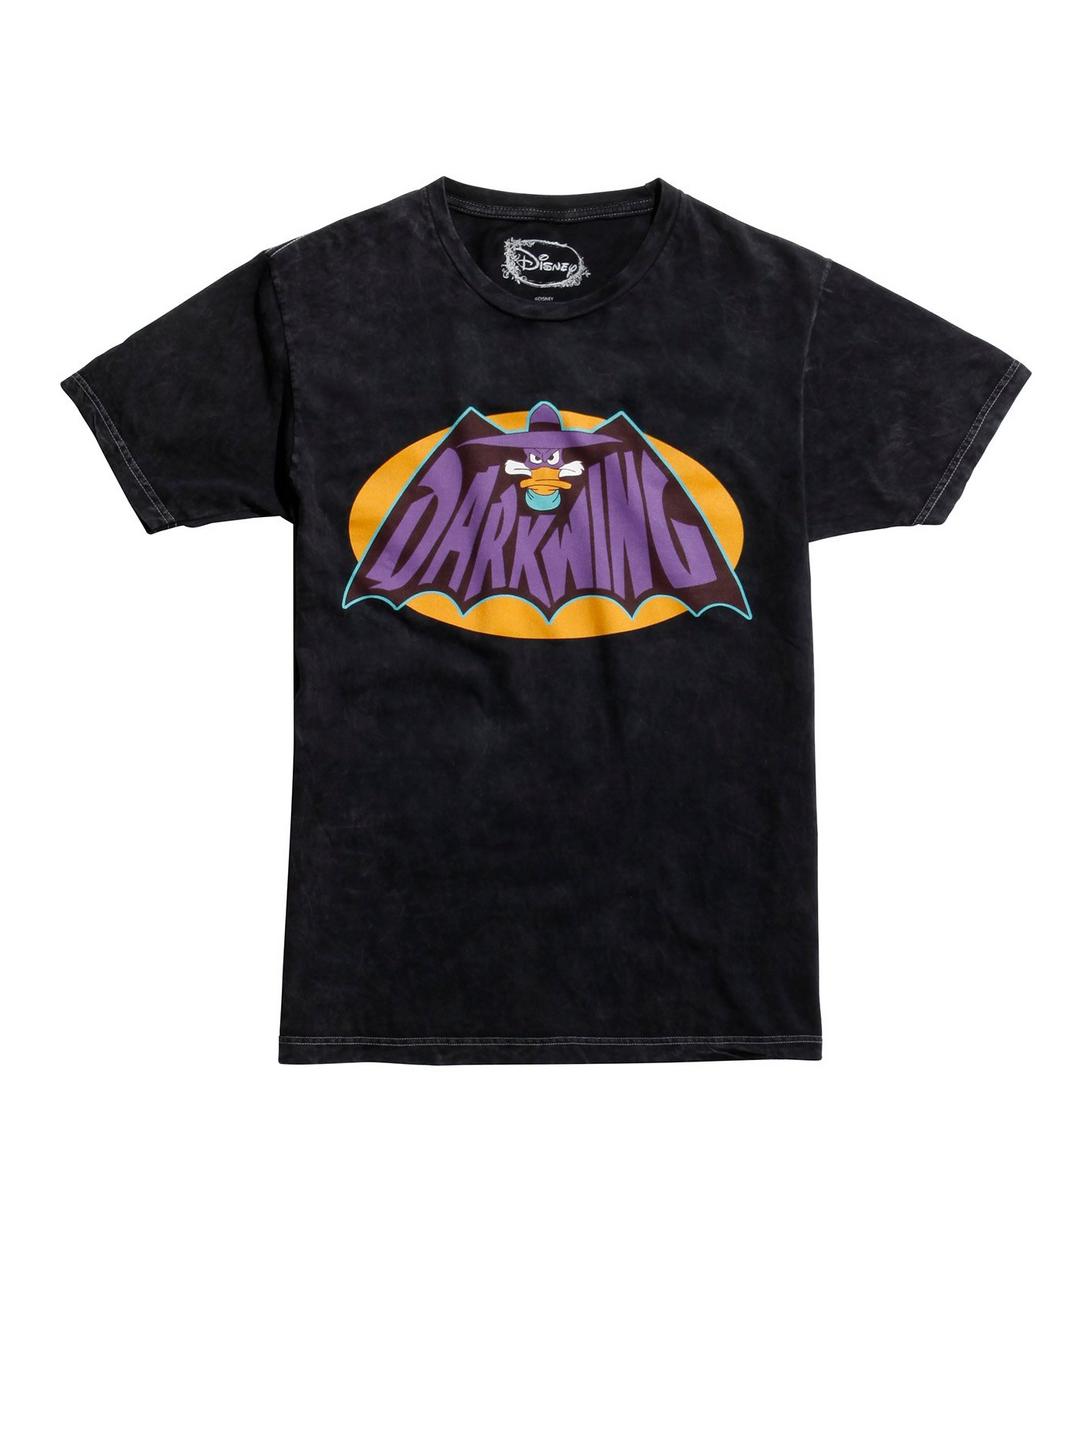 Disney Darkwing Duck Cape Wings Logo T-Shirt, BLACK, hi-res